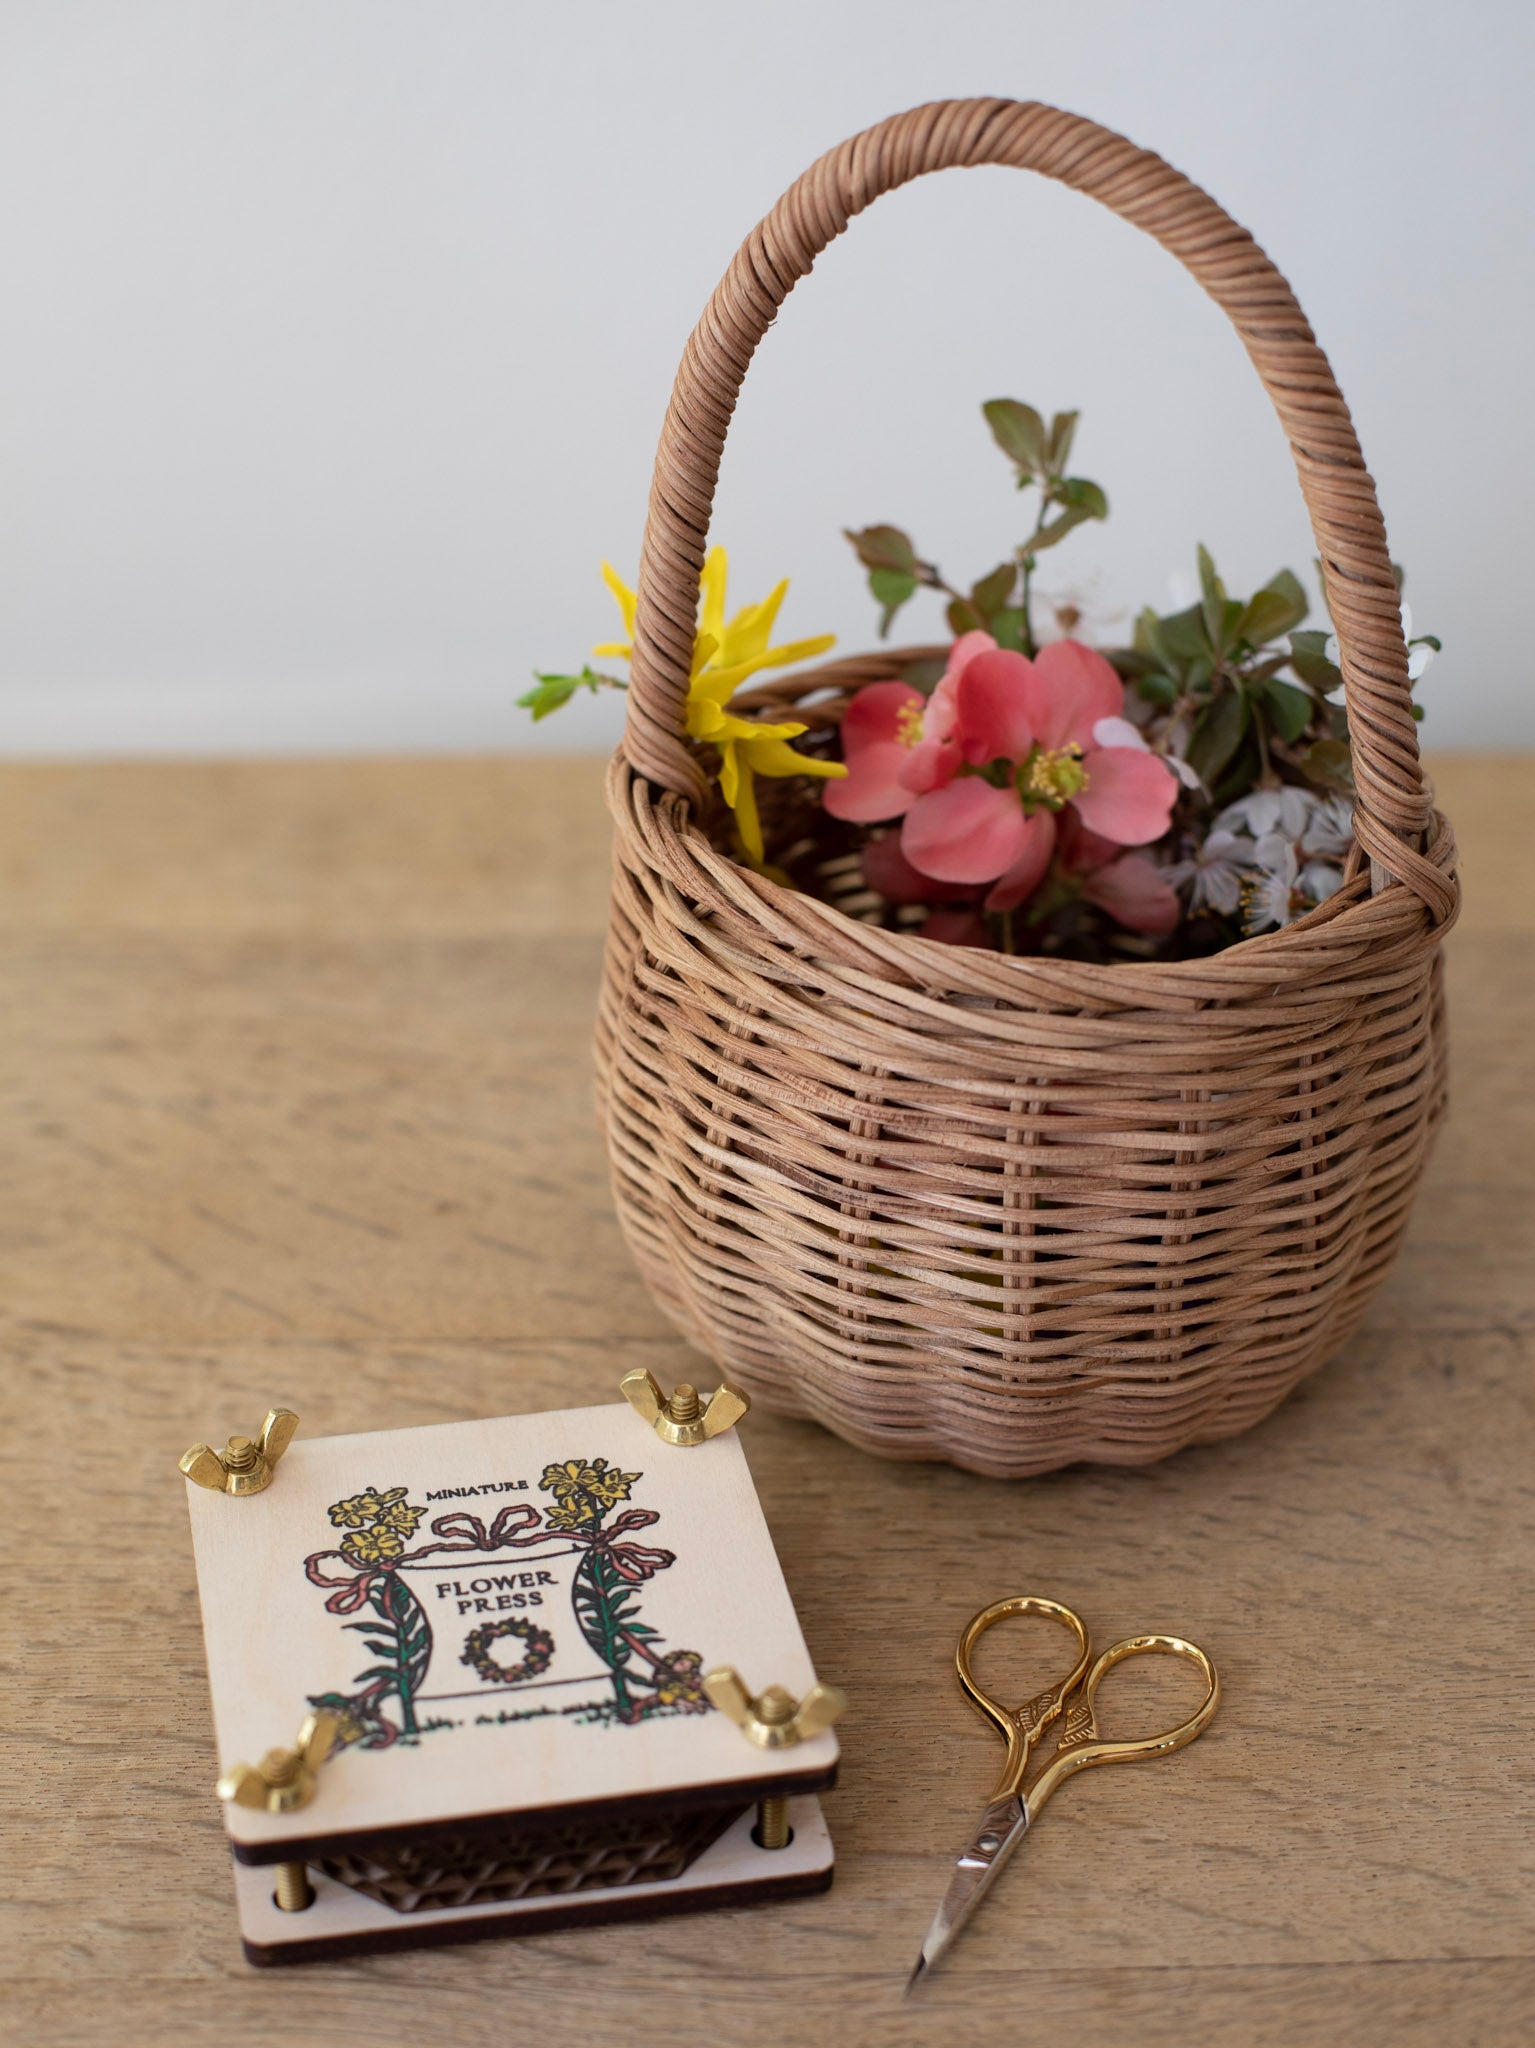 Botanical Heirloom Flower Press Kit, Oak Couple gifts by Em and Me Studio